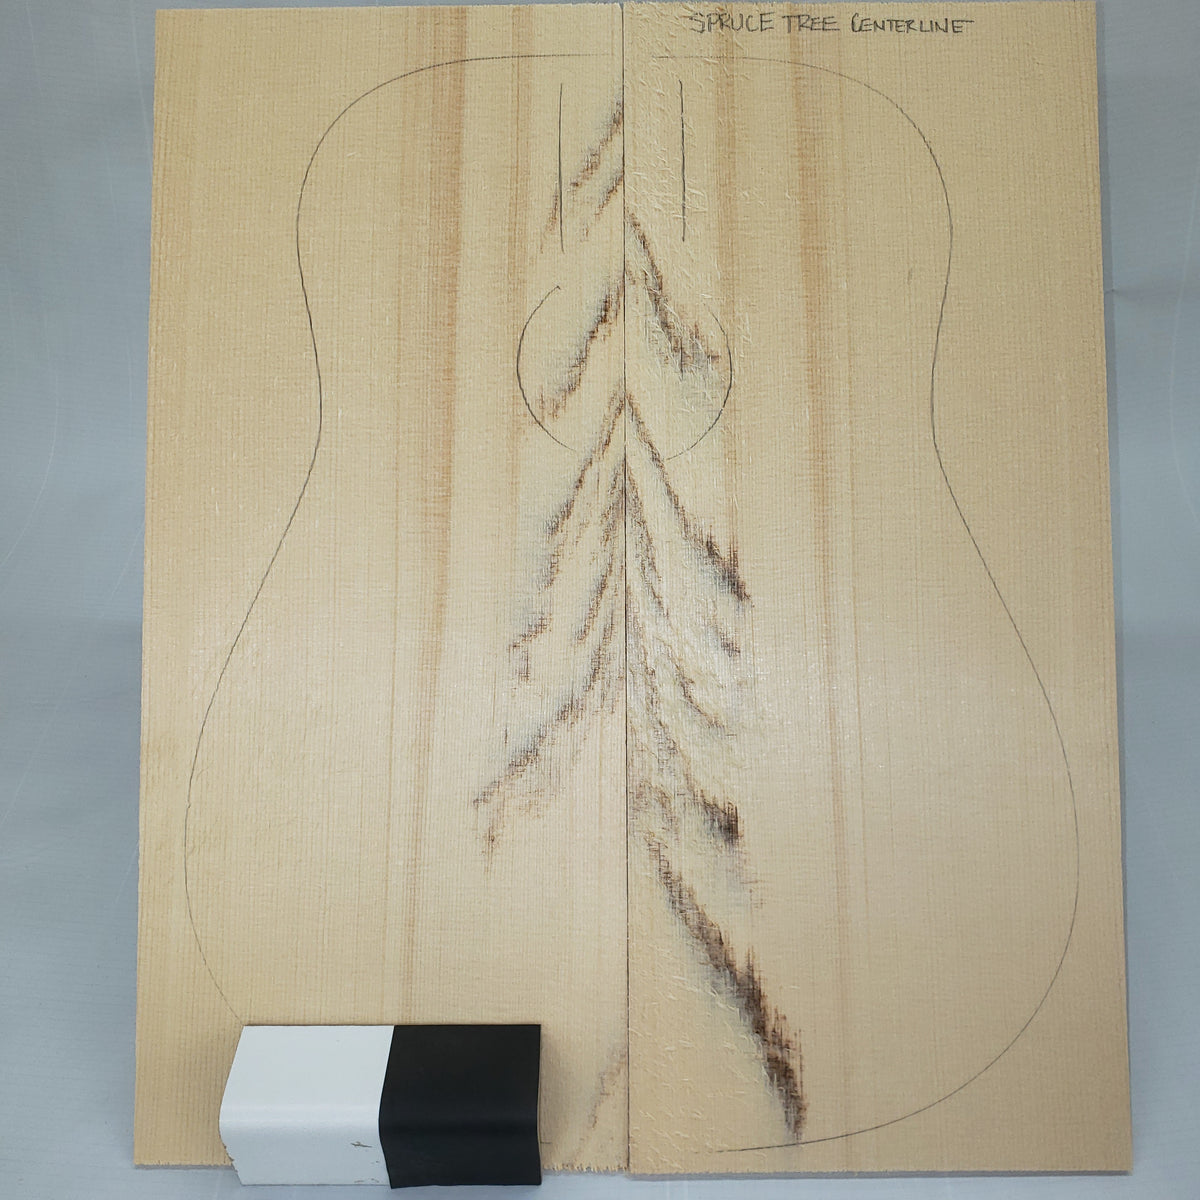 Artist Series &quot;Spruce Tree Centerline&quot;